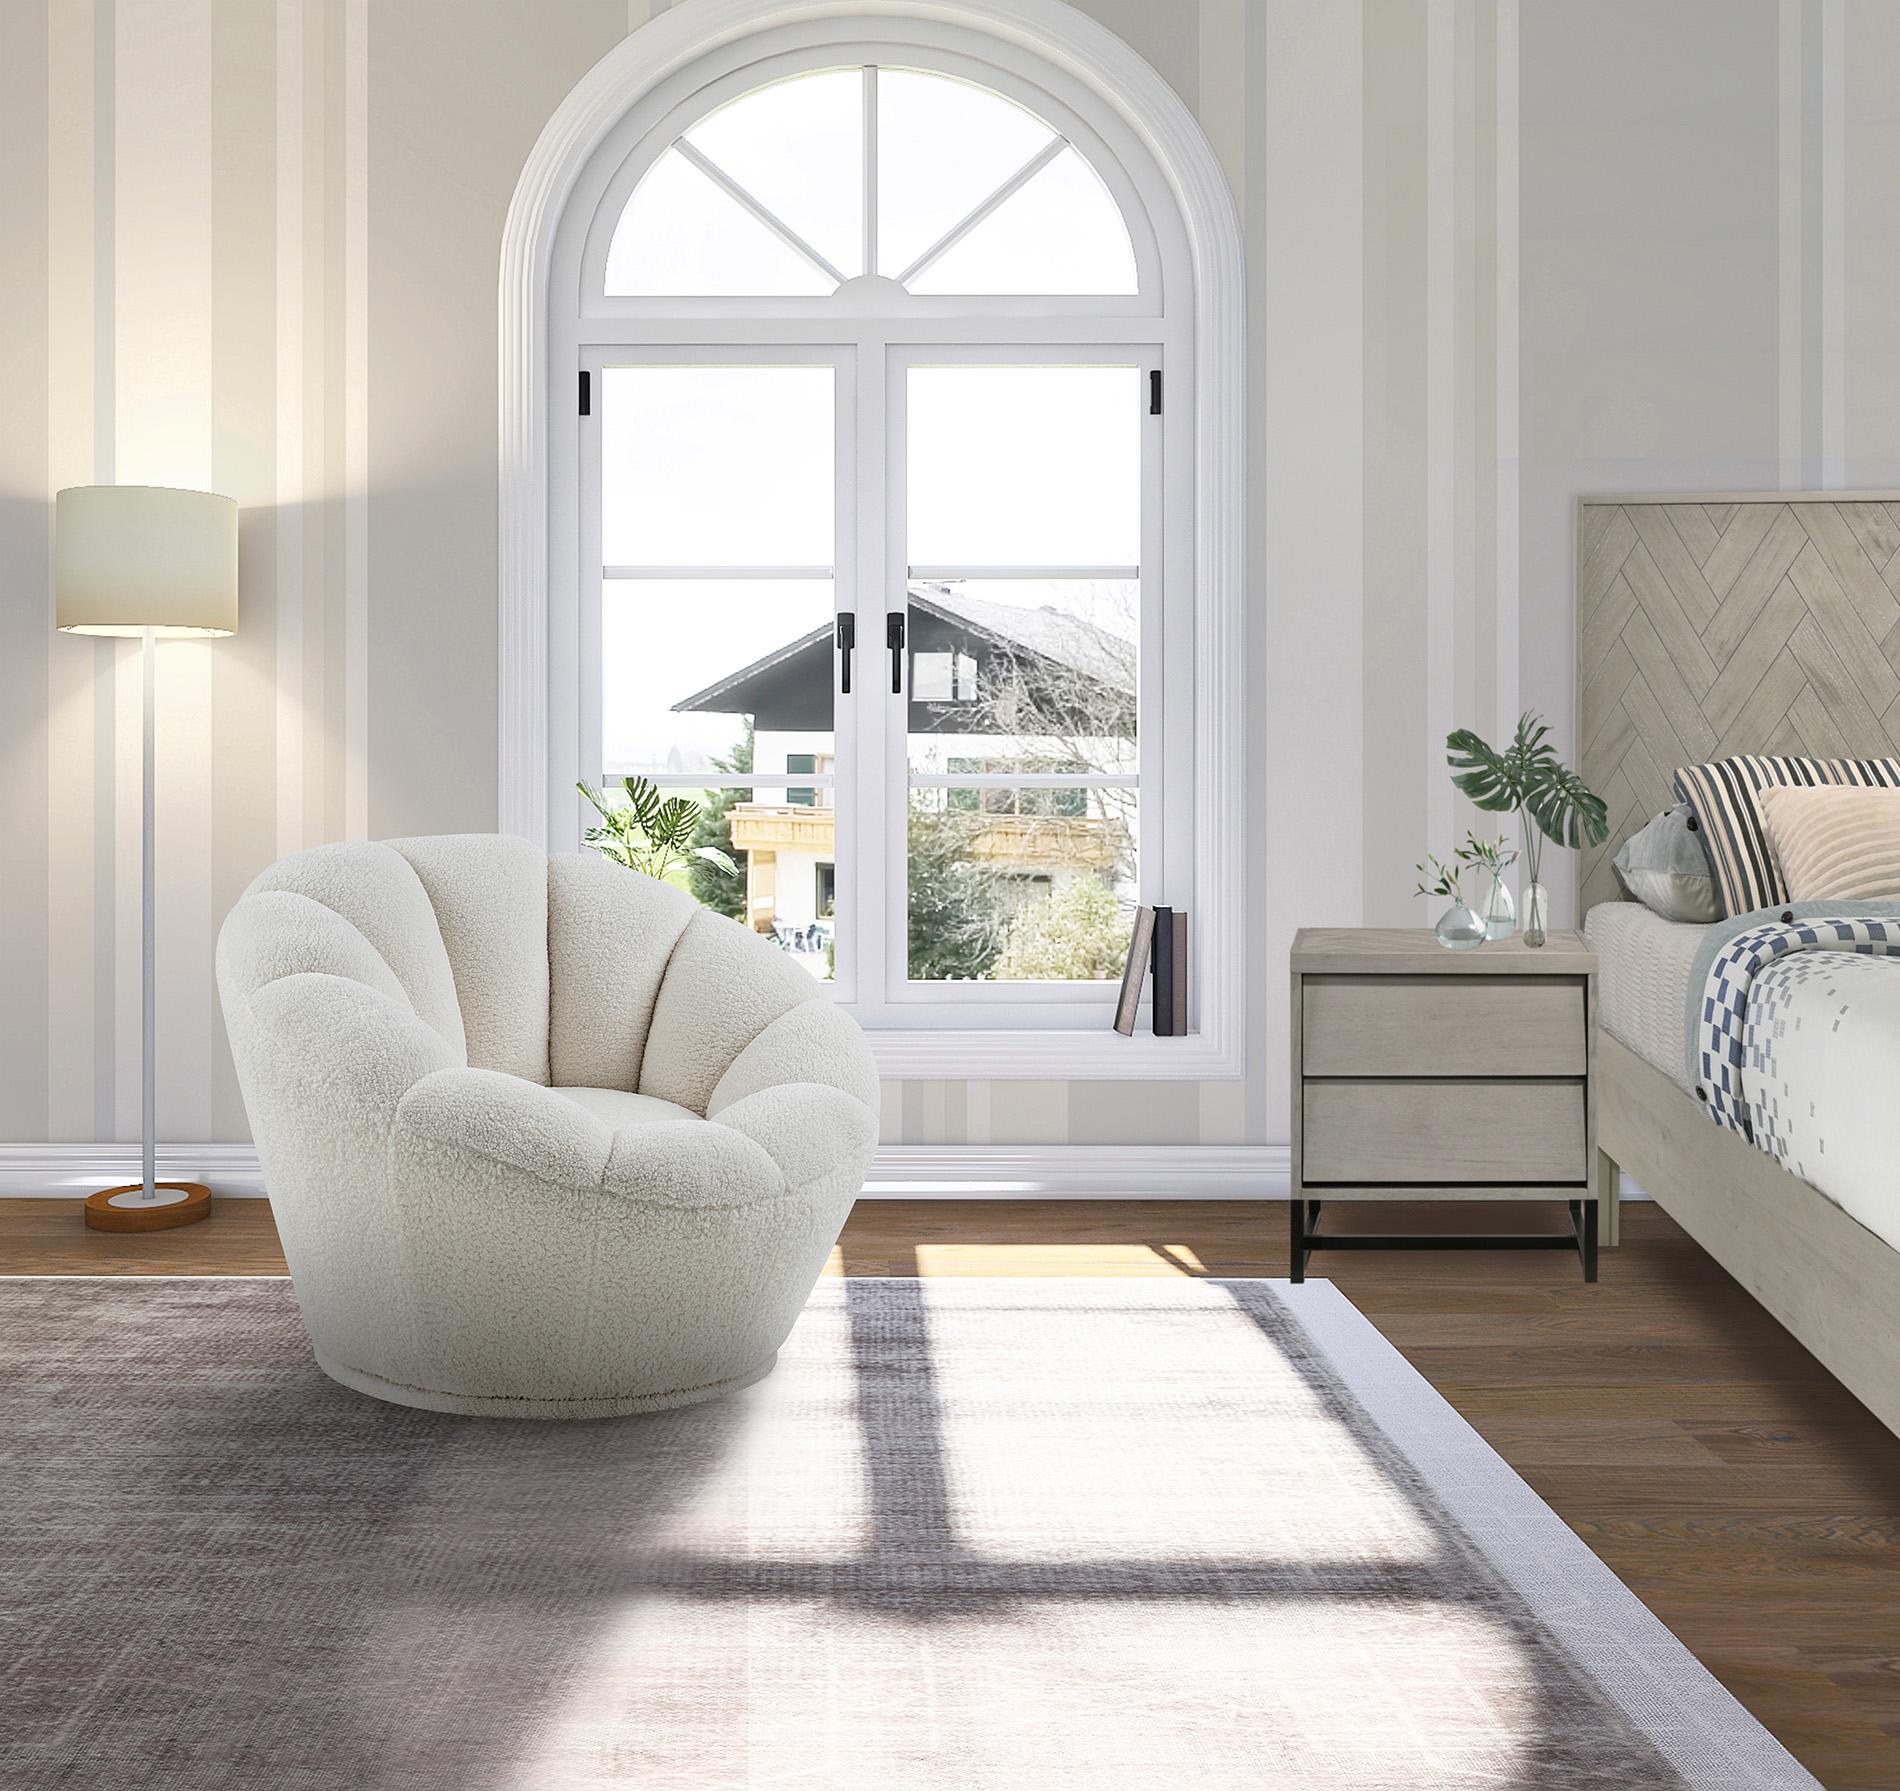 

    
White Faux Sheepskin Fur Swivel Chair DREAM 514Fur Meridian Modern Contemporary
